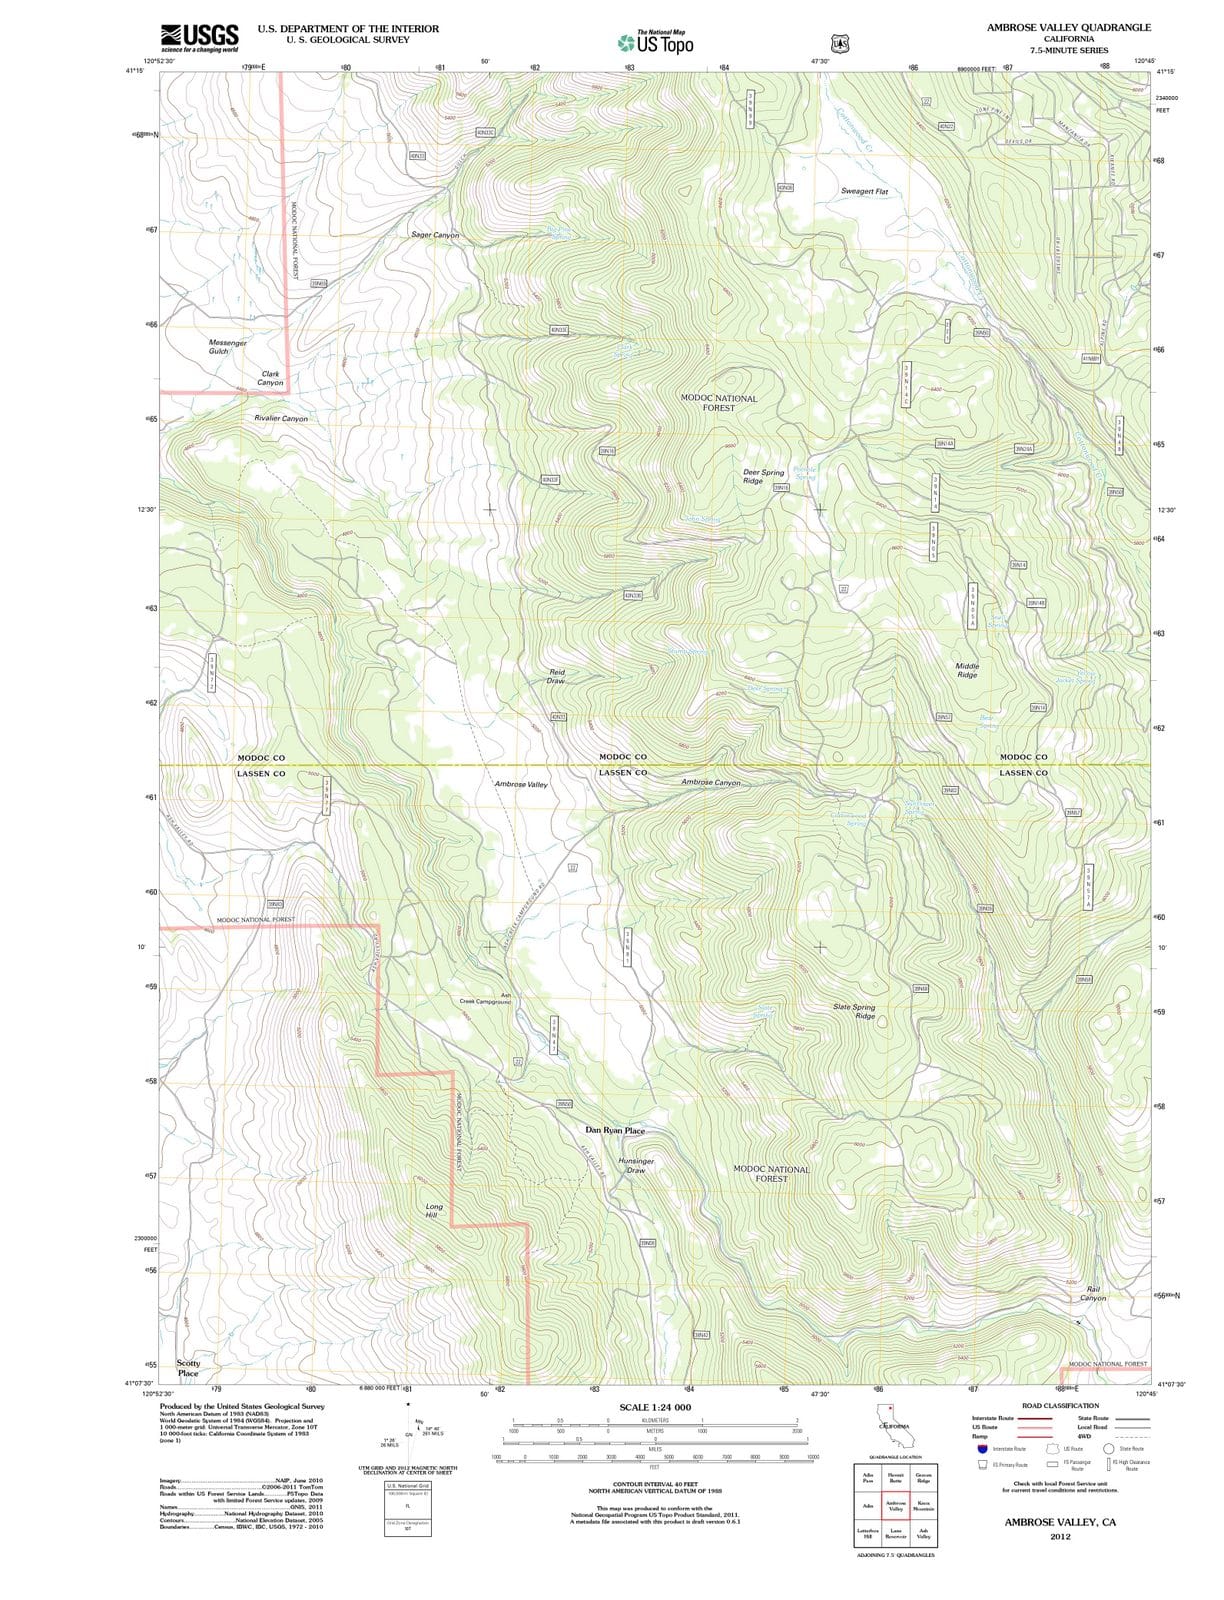 2012 Ambrose Valley, CA - California - USGS Topographic Map